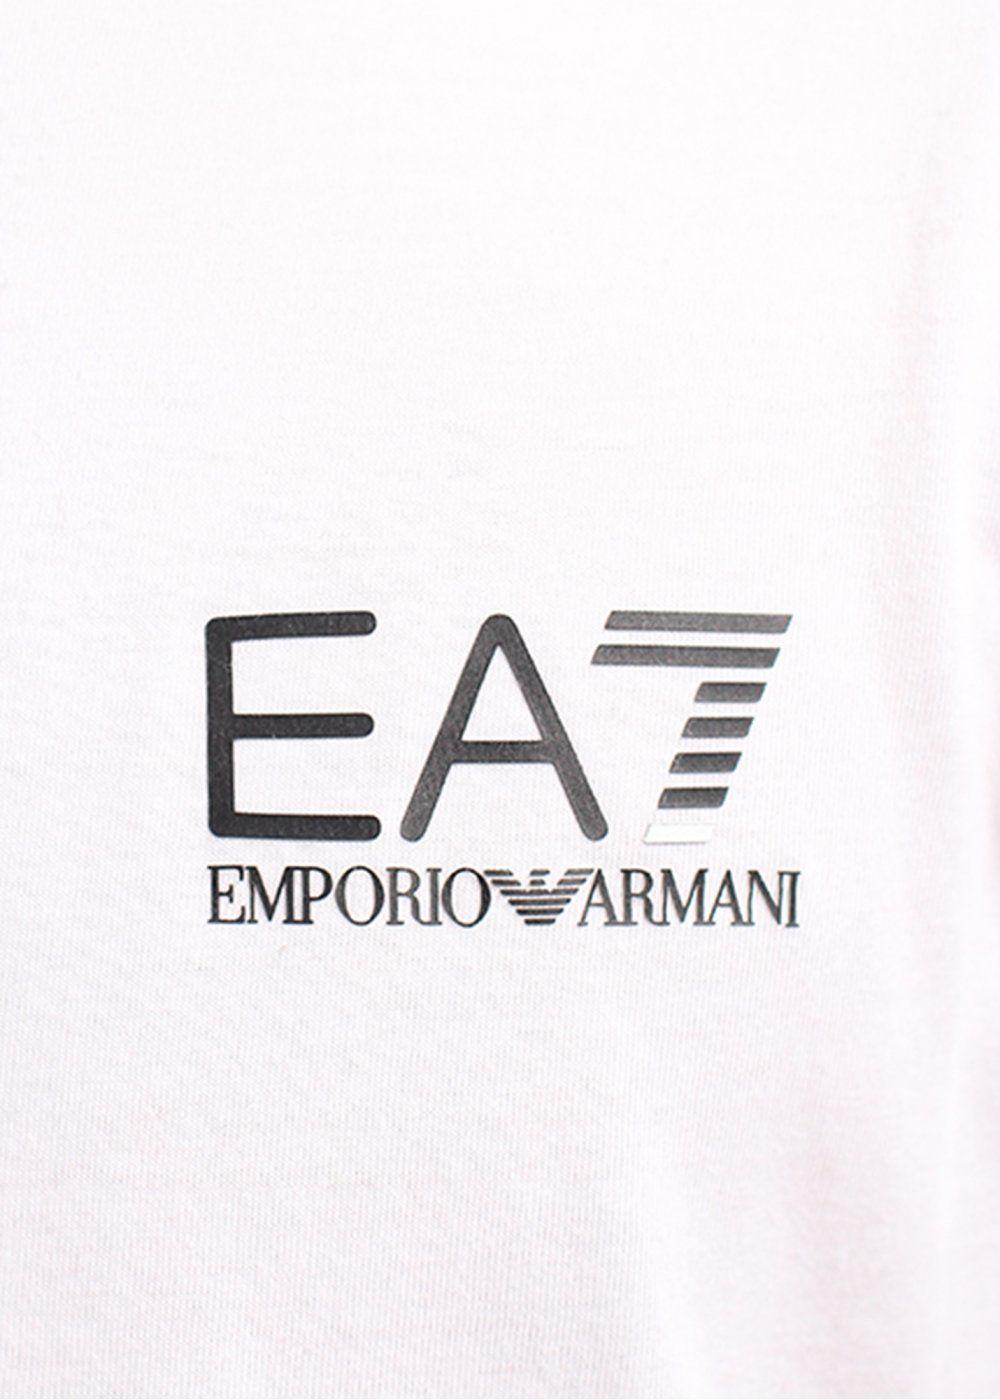 Emporio Armani Wallpapers - Top Free Emporio Armani Backgrounds ...